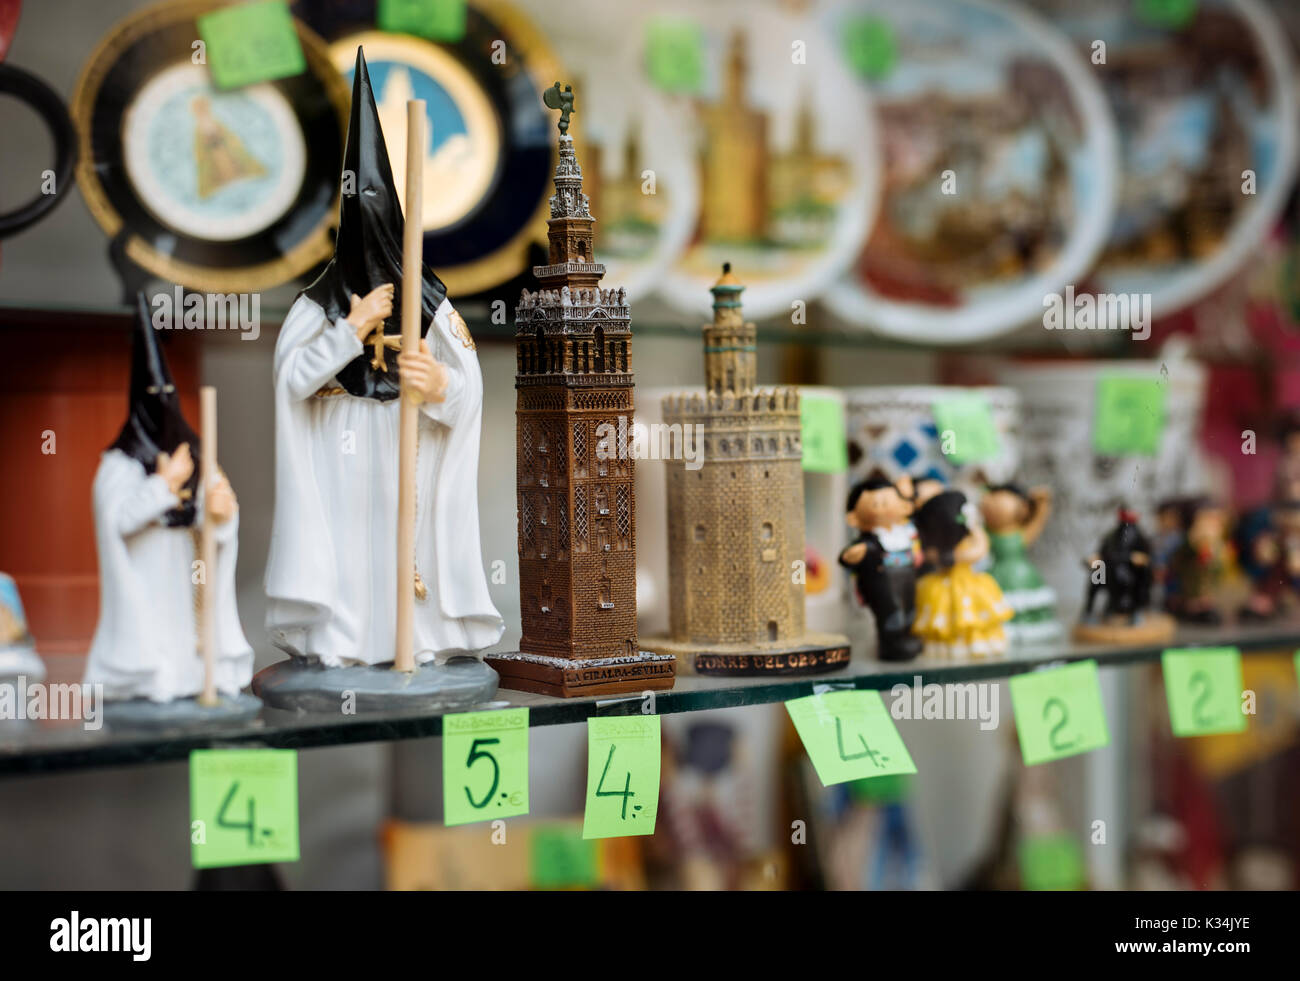 Semana Santa souvenirs on display, Seville, Andalucia, Spain Stock Photo